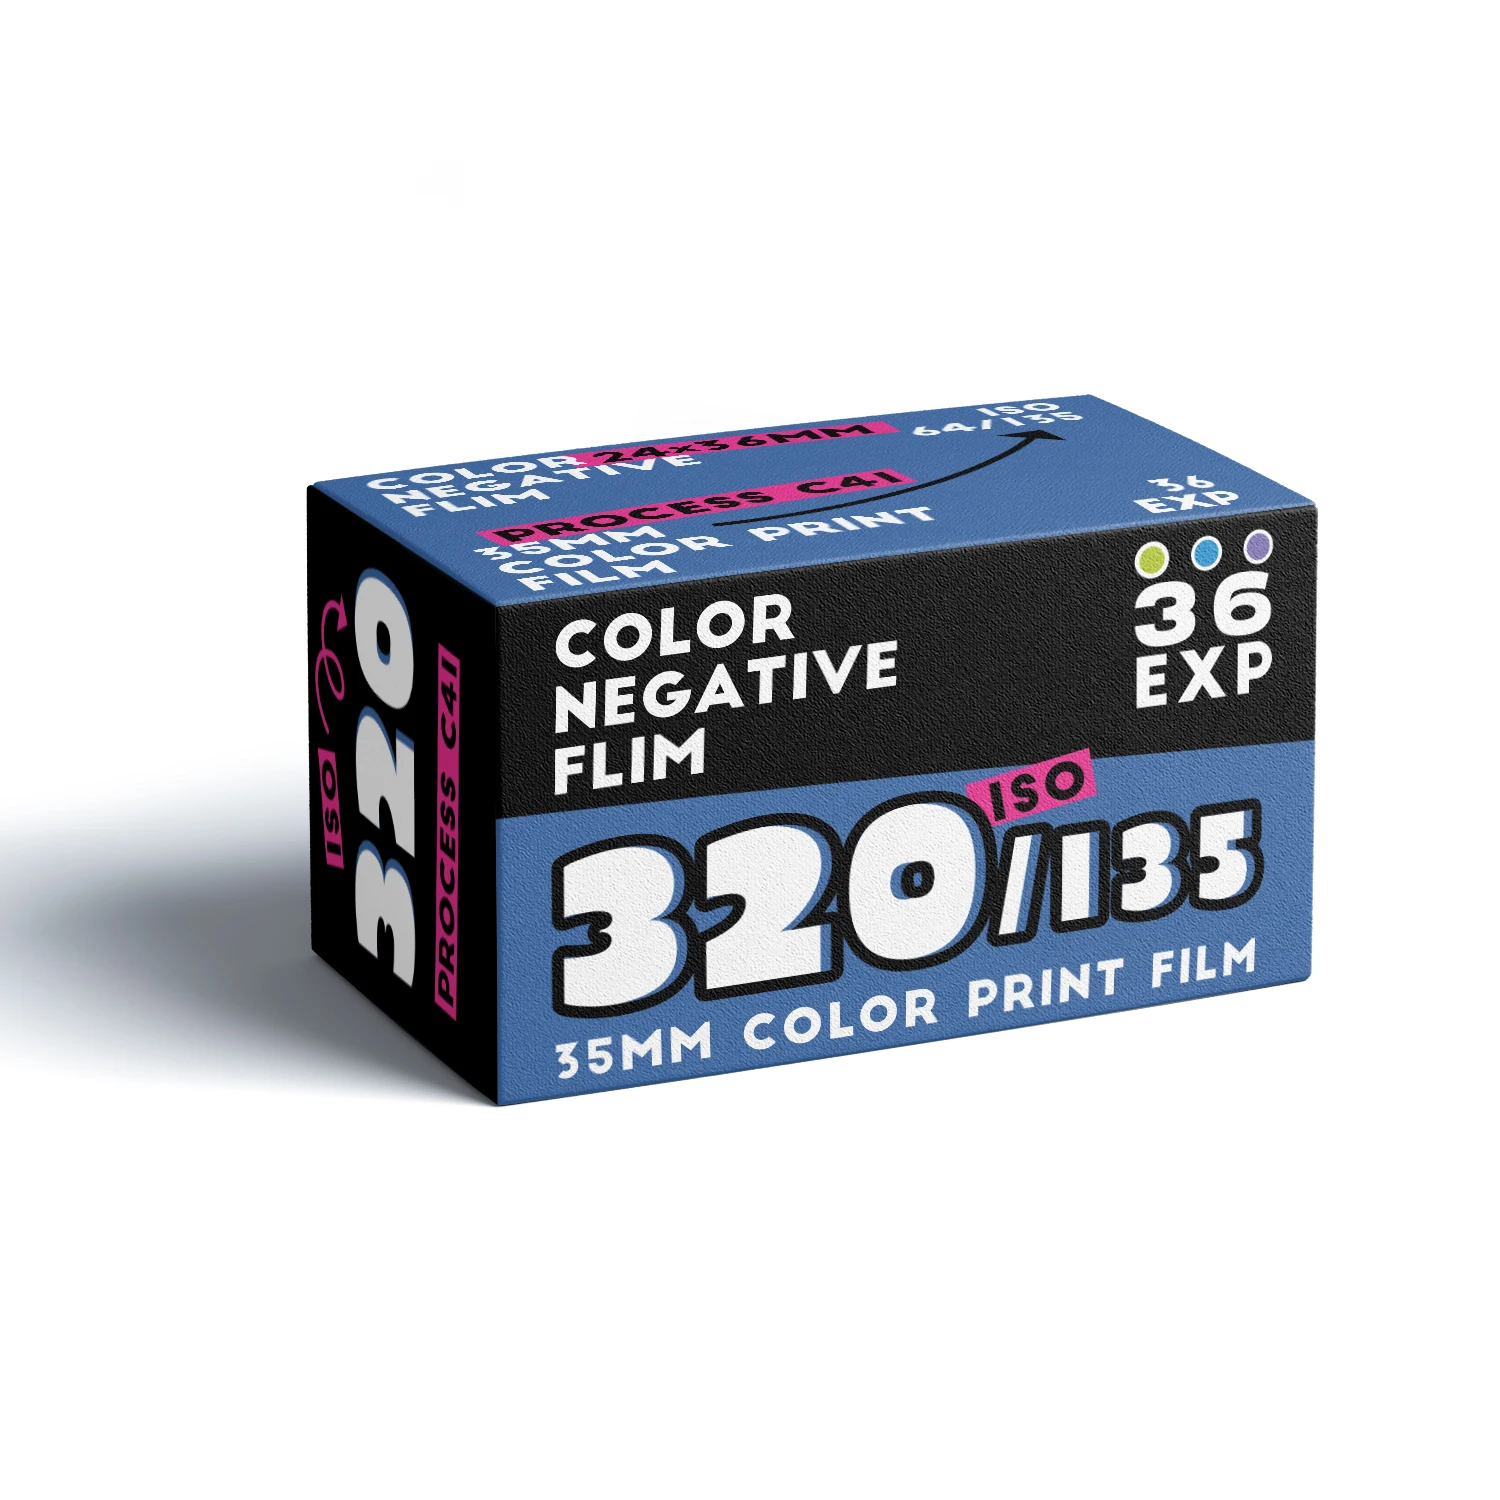 Цветная пленка 35 мм в рулонах, одноразовая пленка для фотоаппарата, отрицательная пленка 400 ISO 36 exp, технологическая фотопленка для фотоаппарата Fuji Fujifilm Kodak